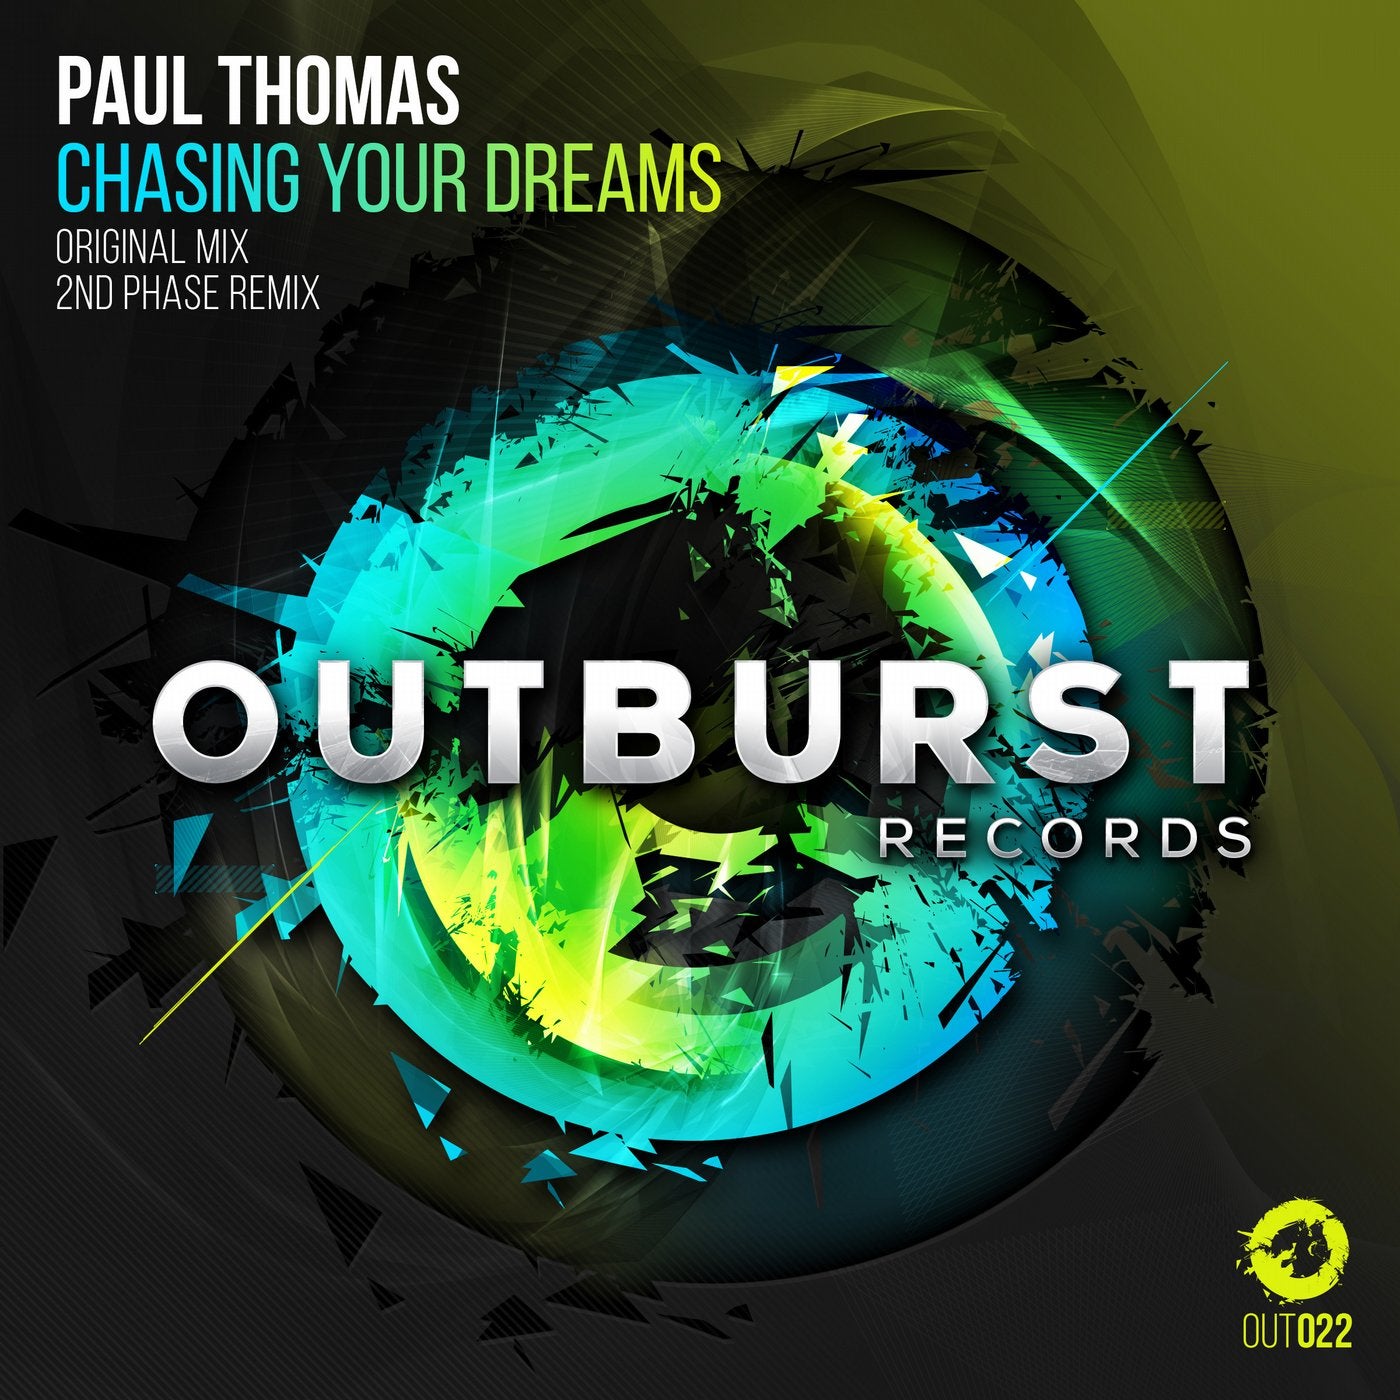 Paul ремикс. Outburst. Paul Thomas DJ. Black hole recordings альбомы. Tech & Trance обложки для альбомов.